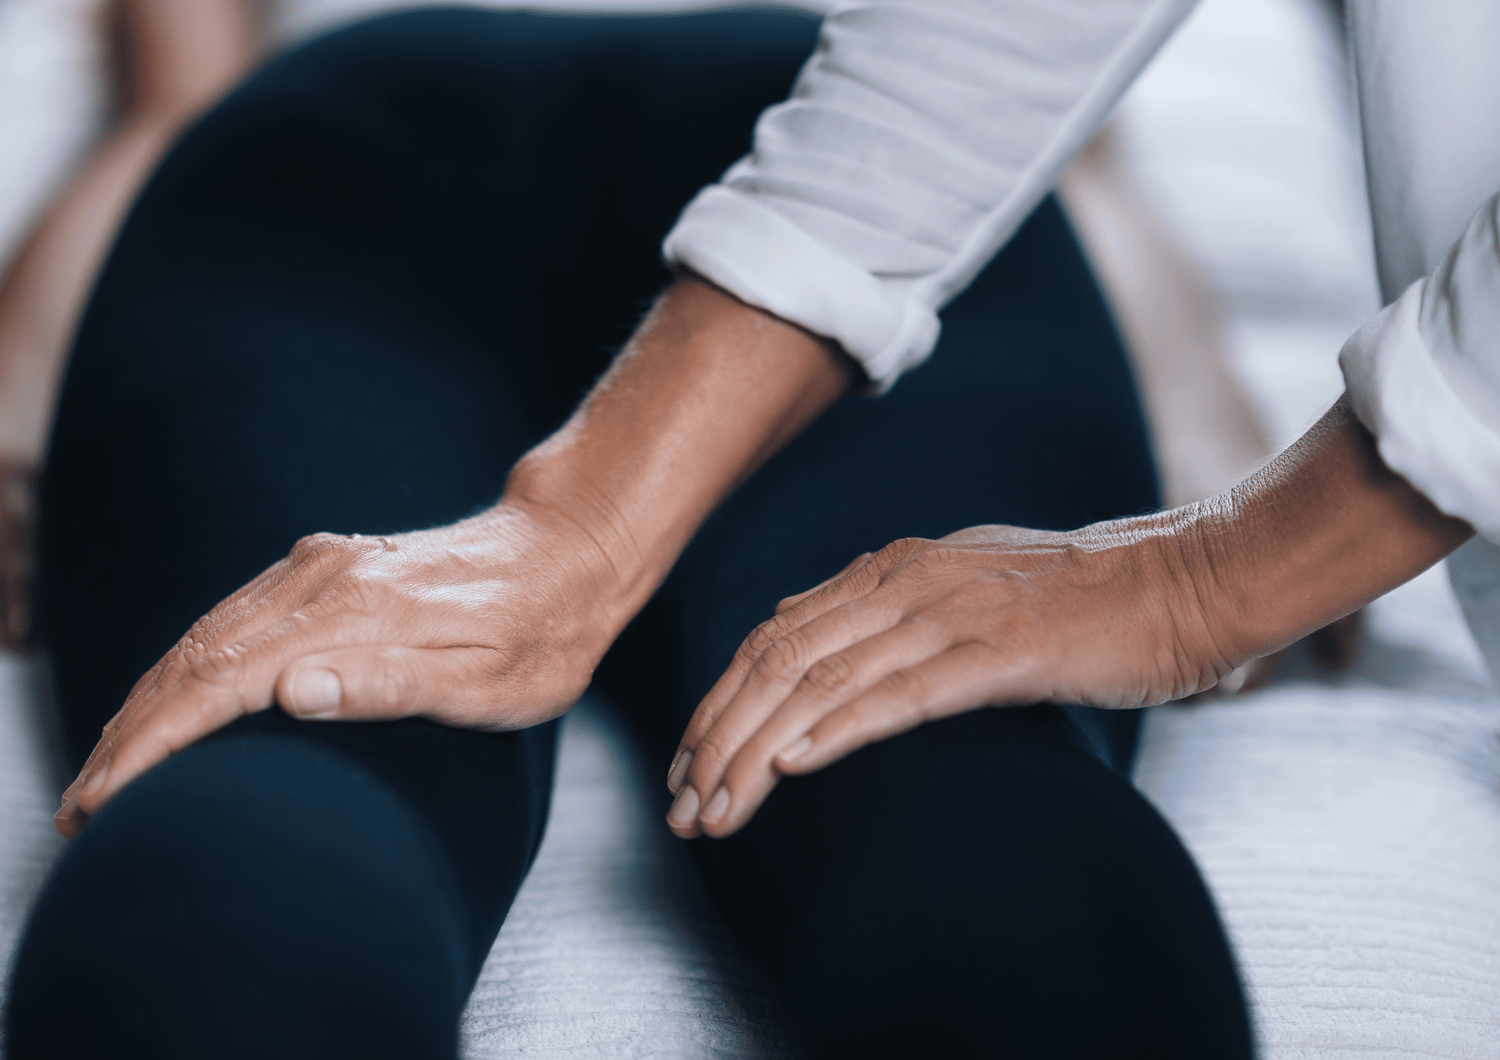 Reiki treatment hands on knees